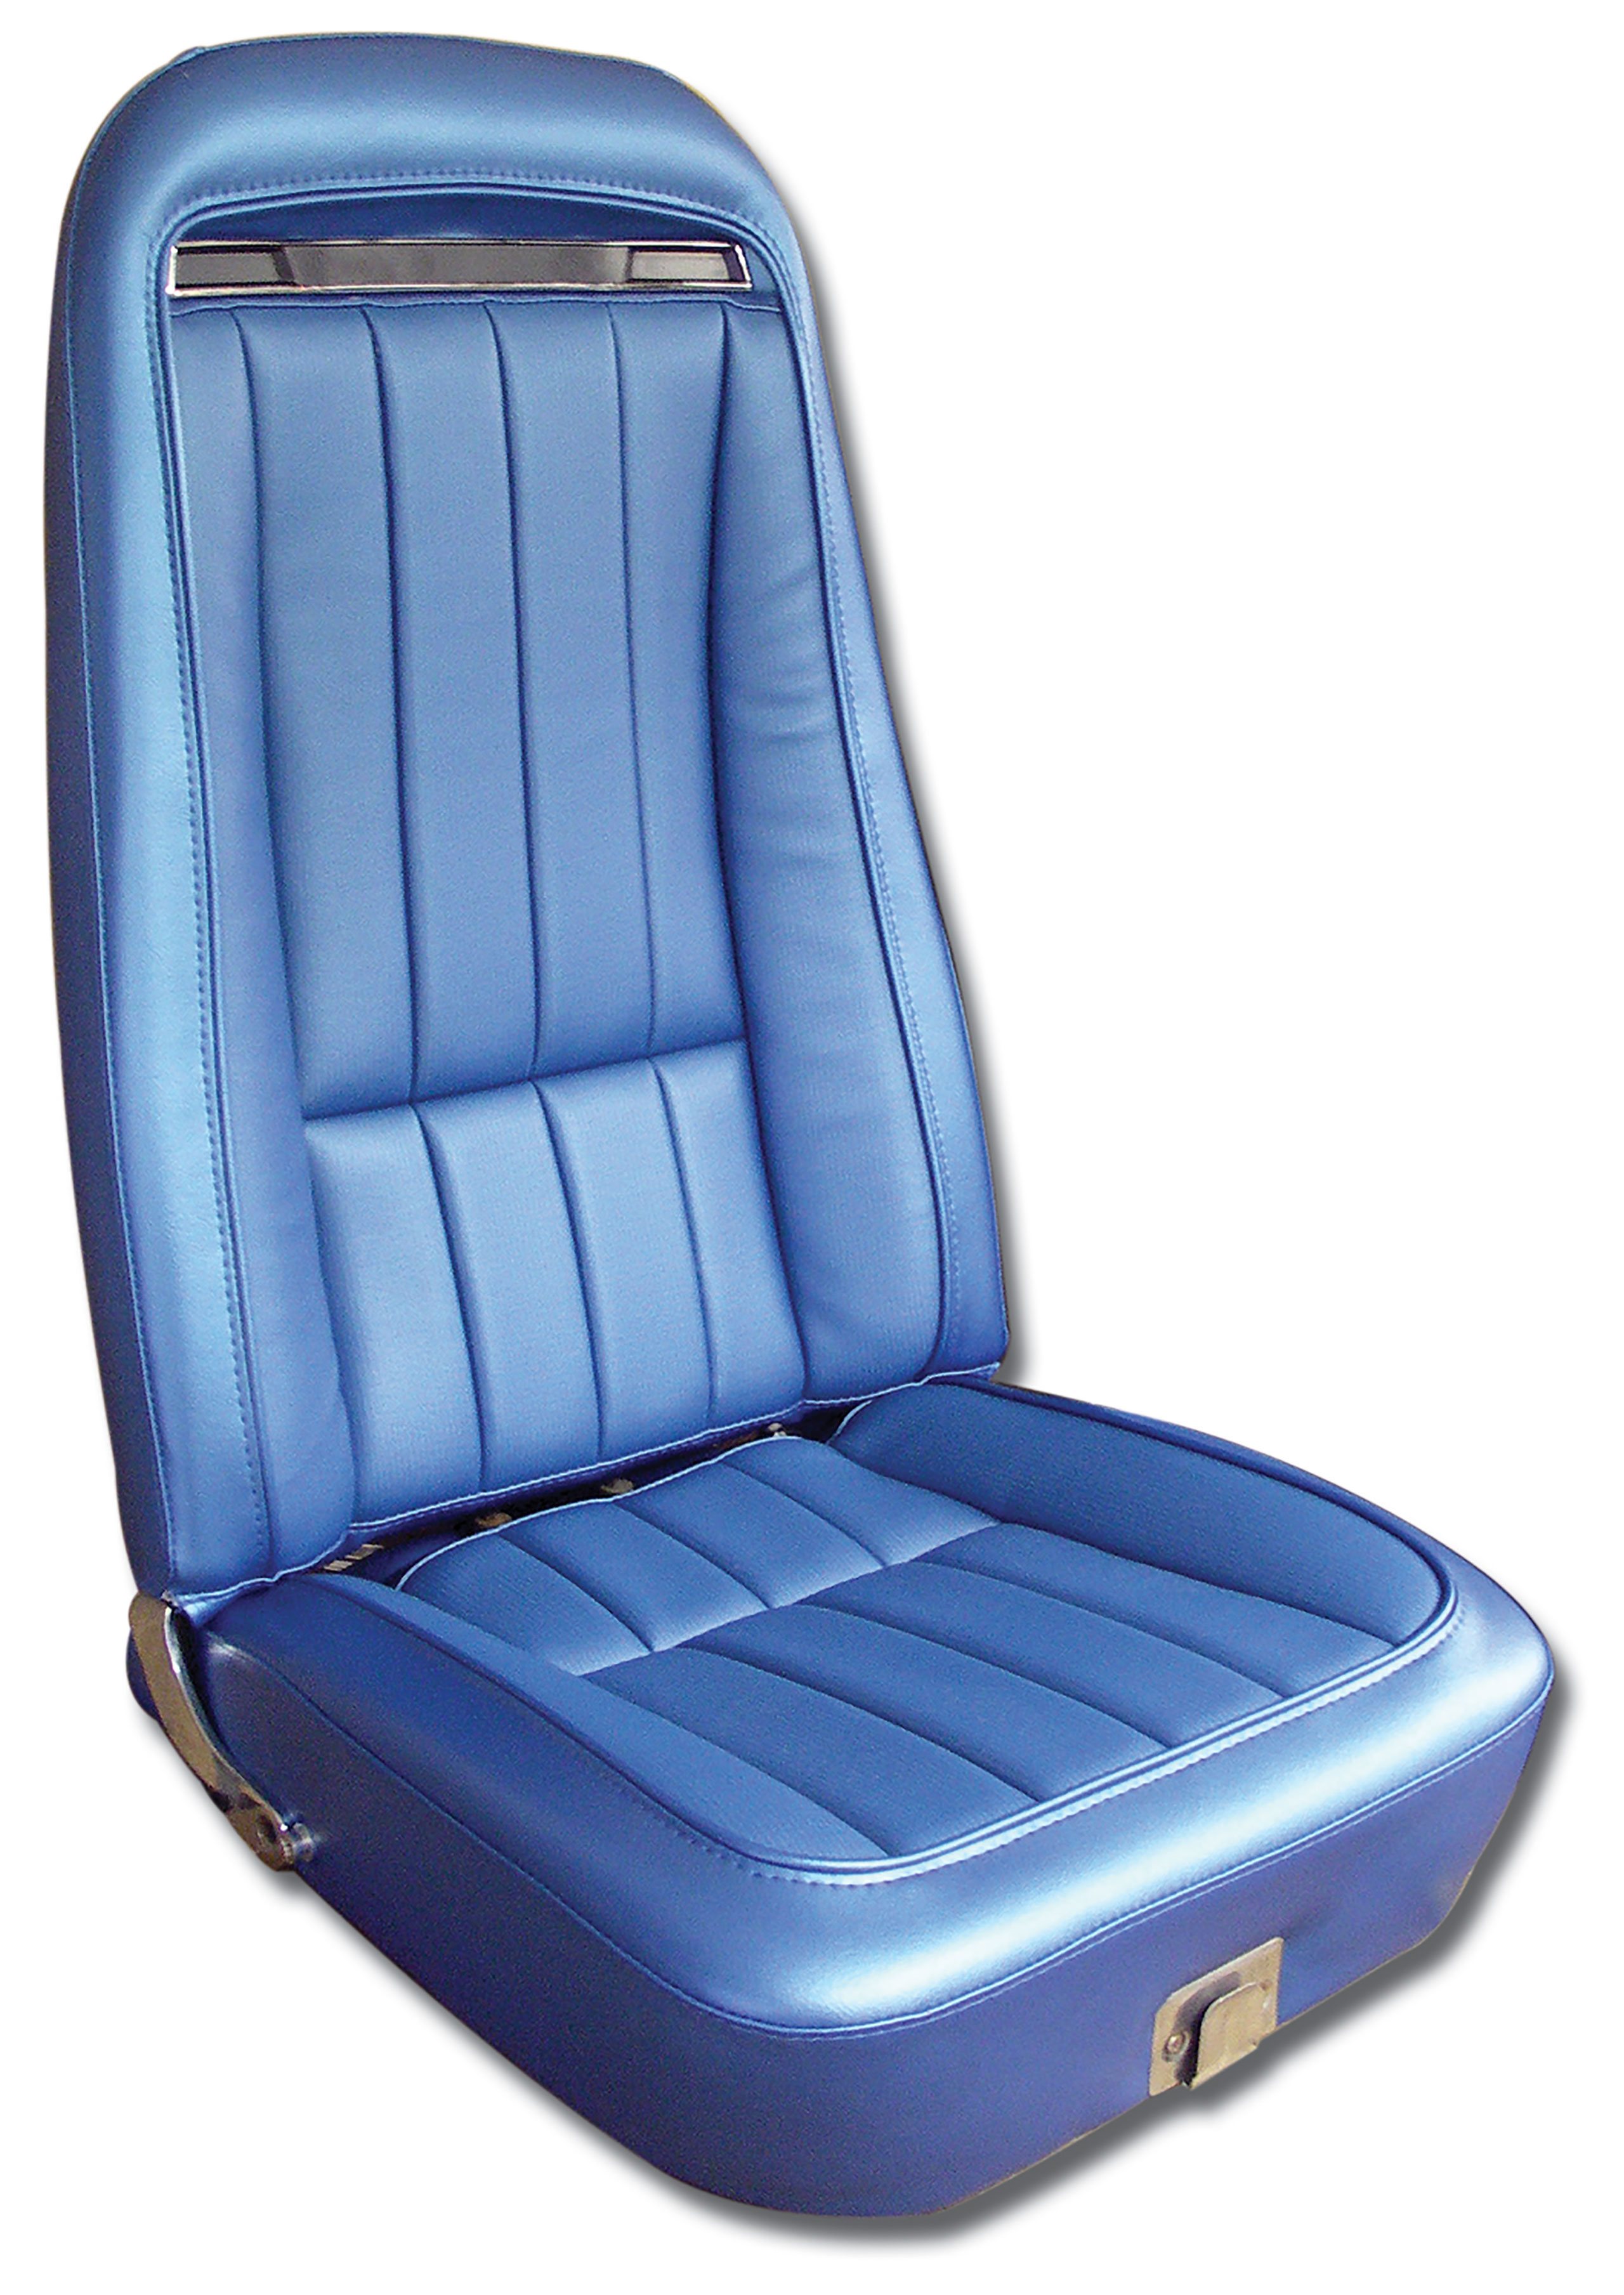 1970 Corvette C3 "Leather-Like" Vinyl Seat Covers Bright Blue CA-421241 